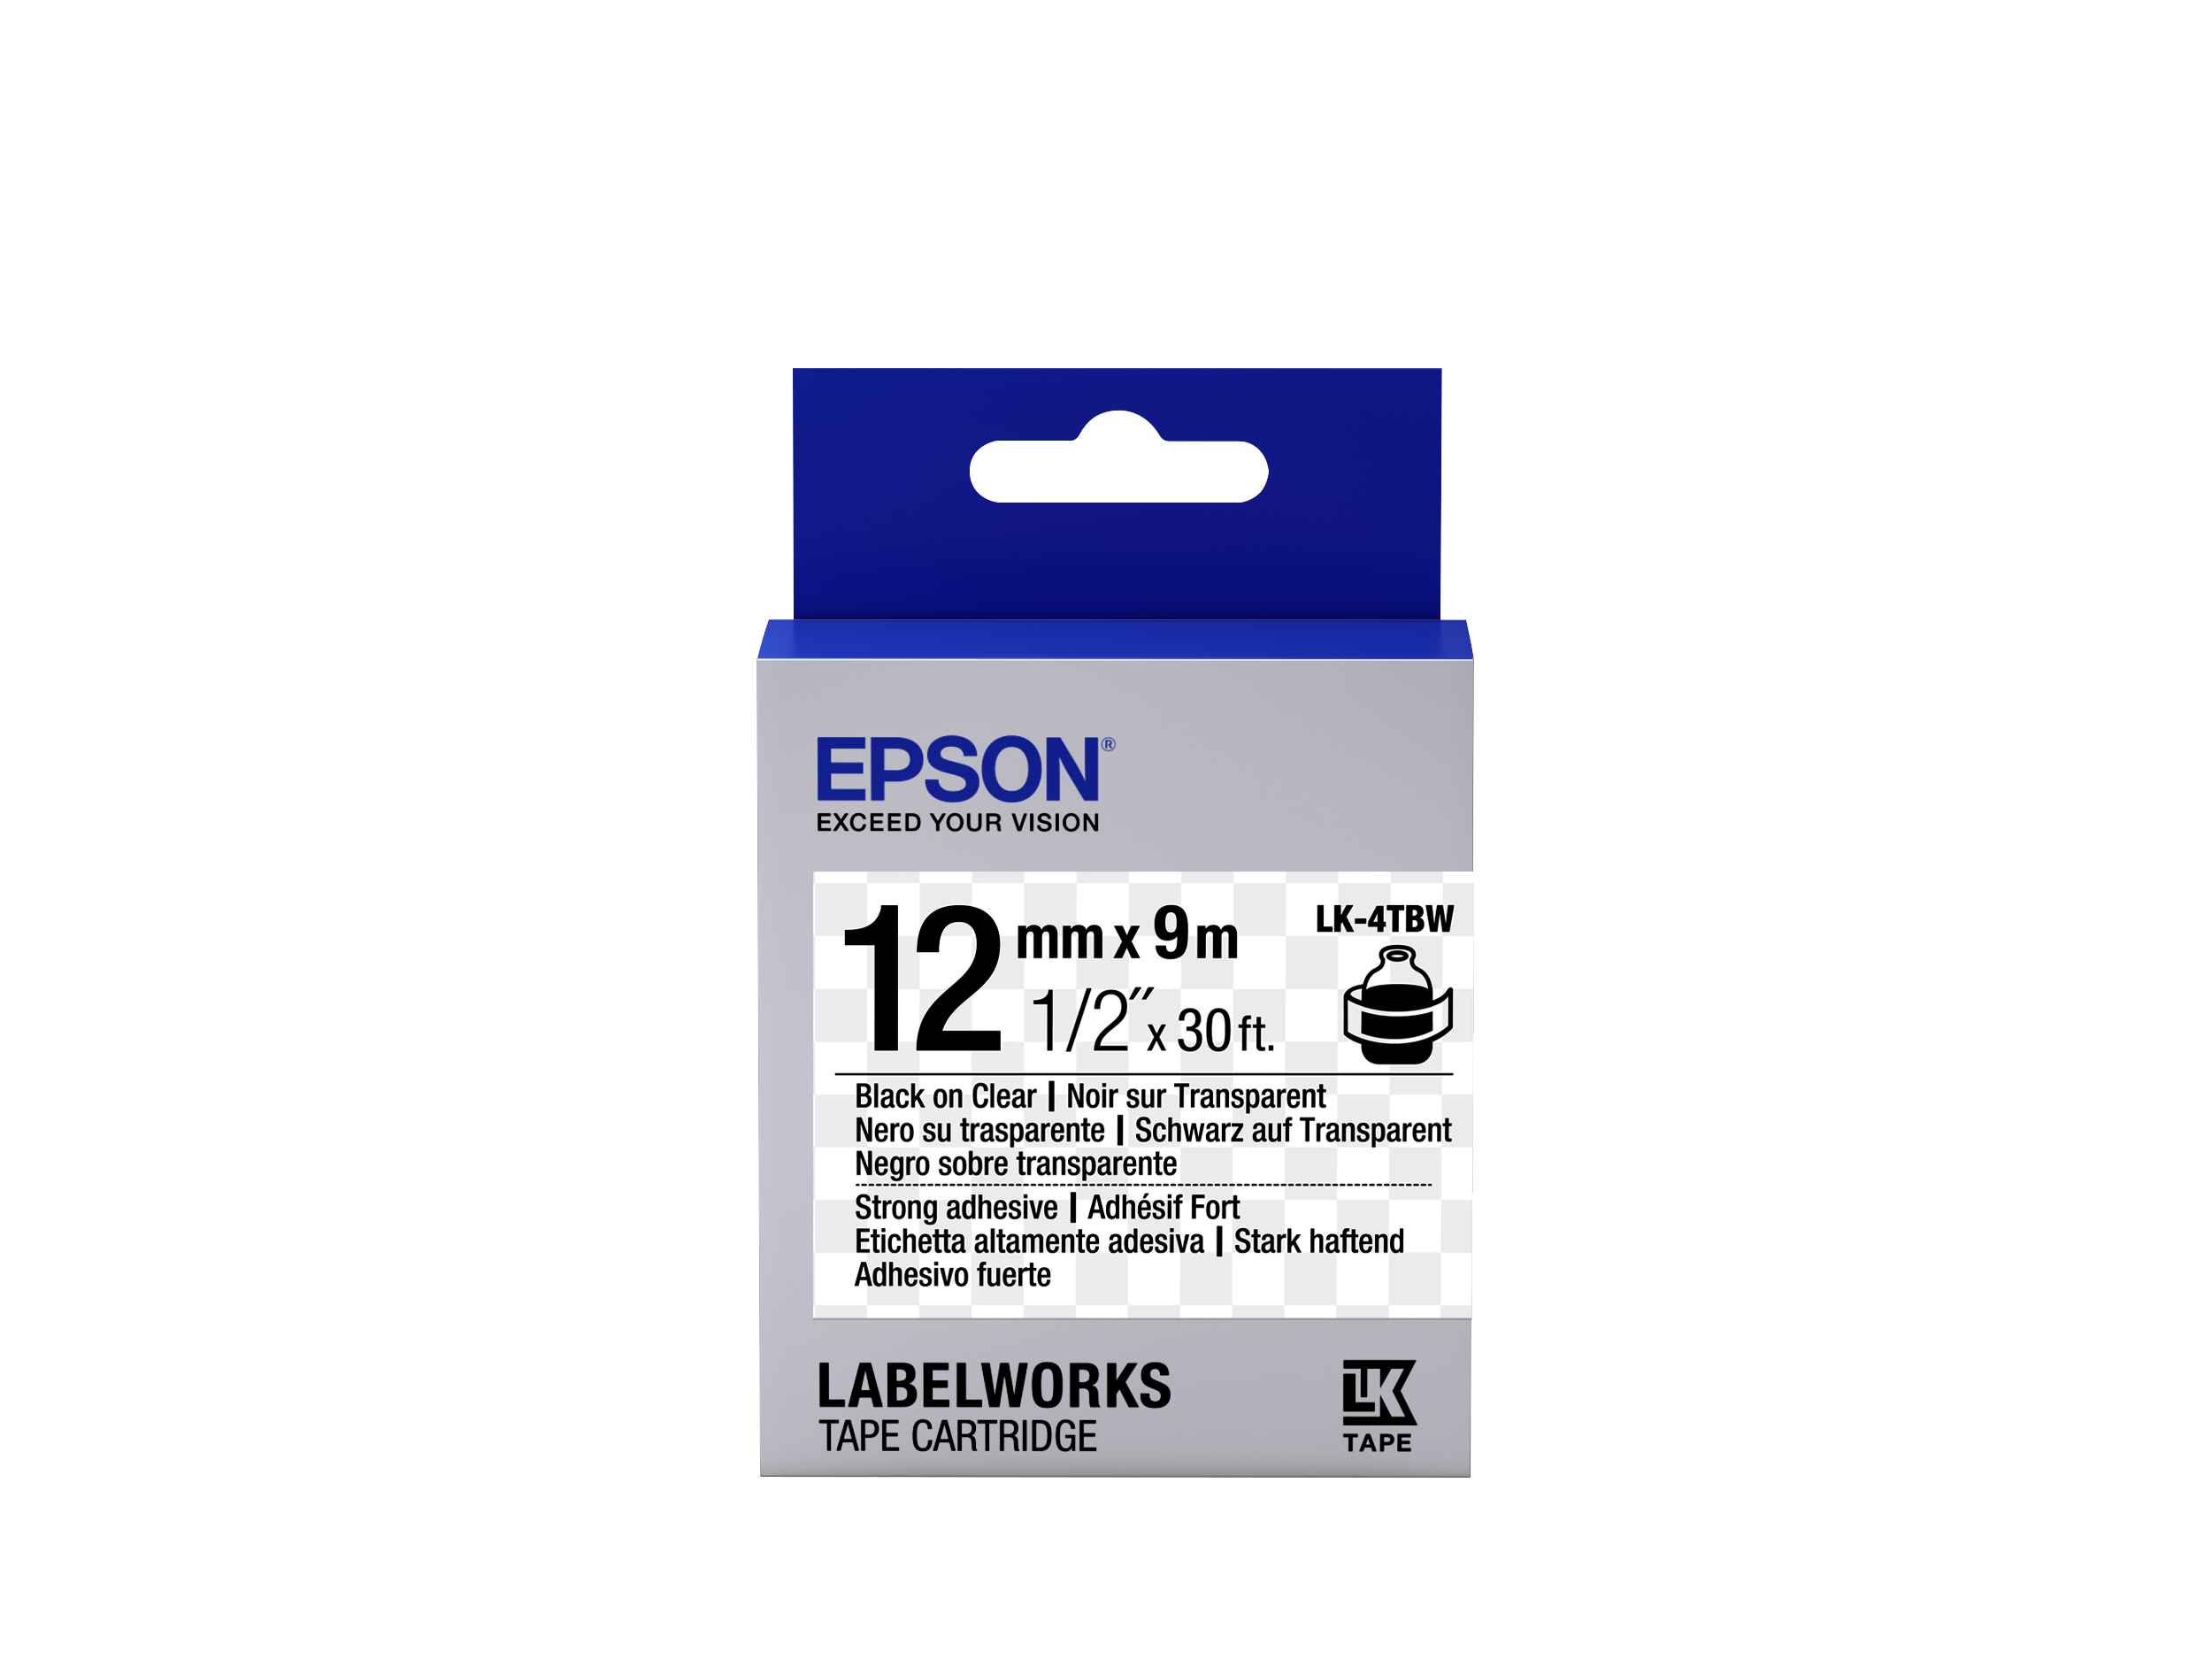 Epson etikettkassett stark självhäftande tejp – LK-4TBW stark tejp svart/klar 12/9